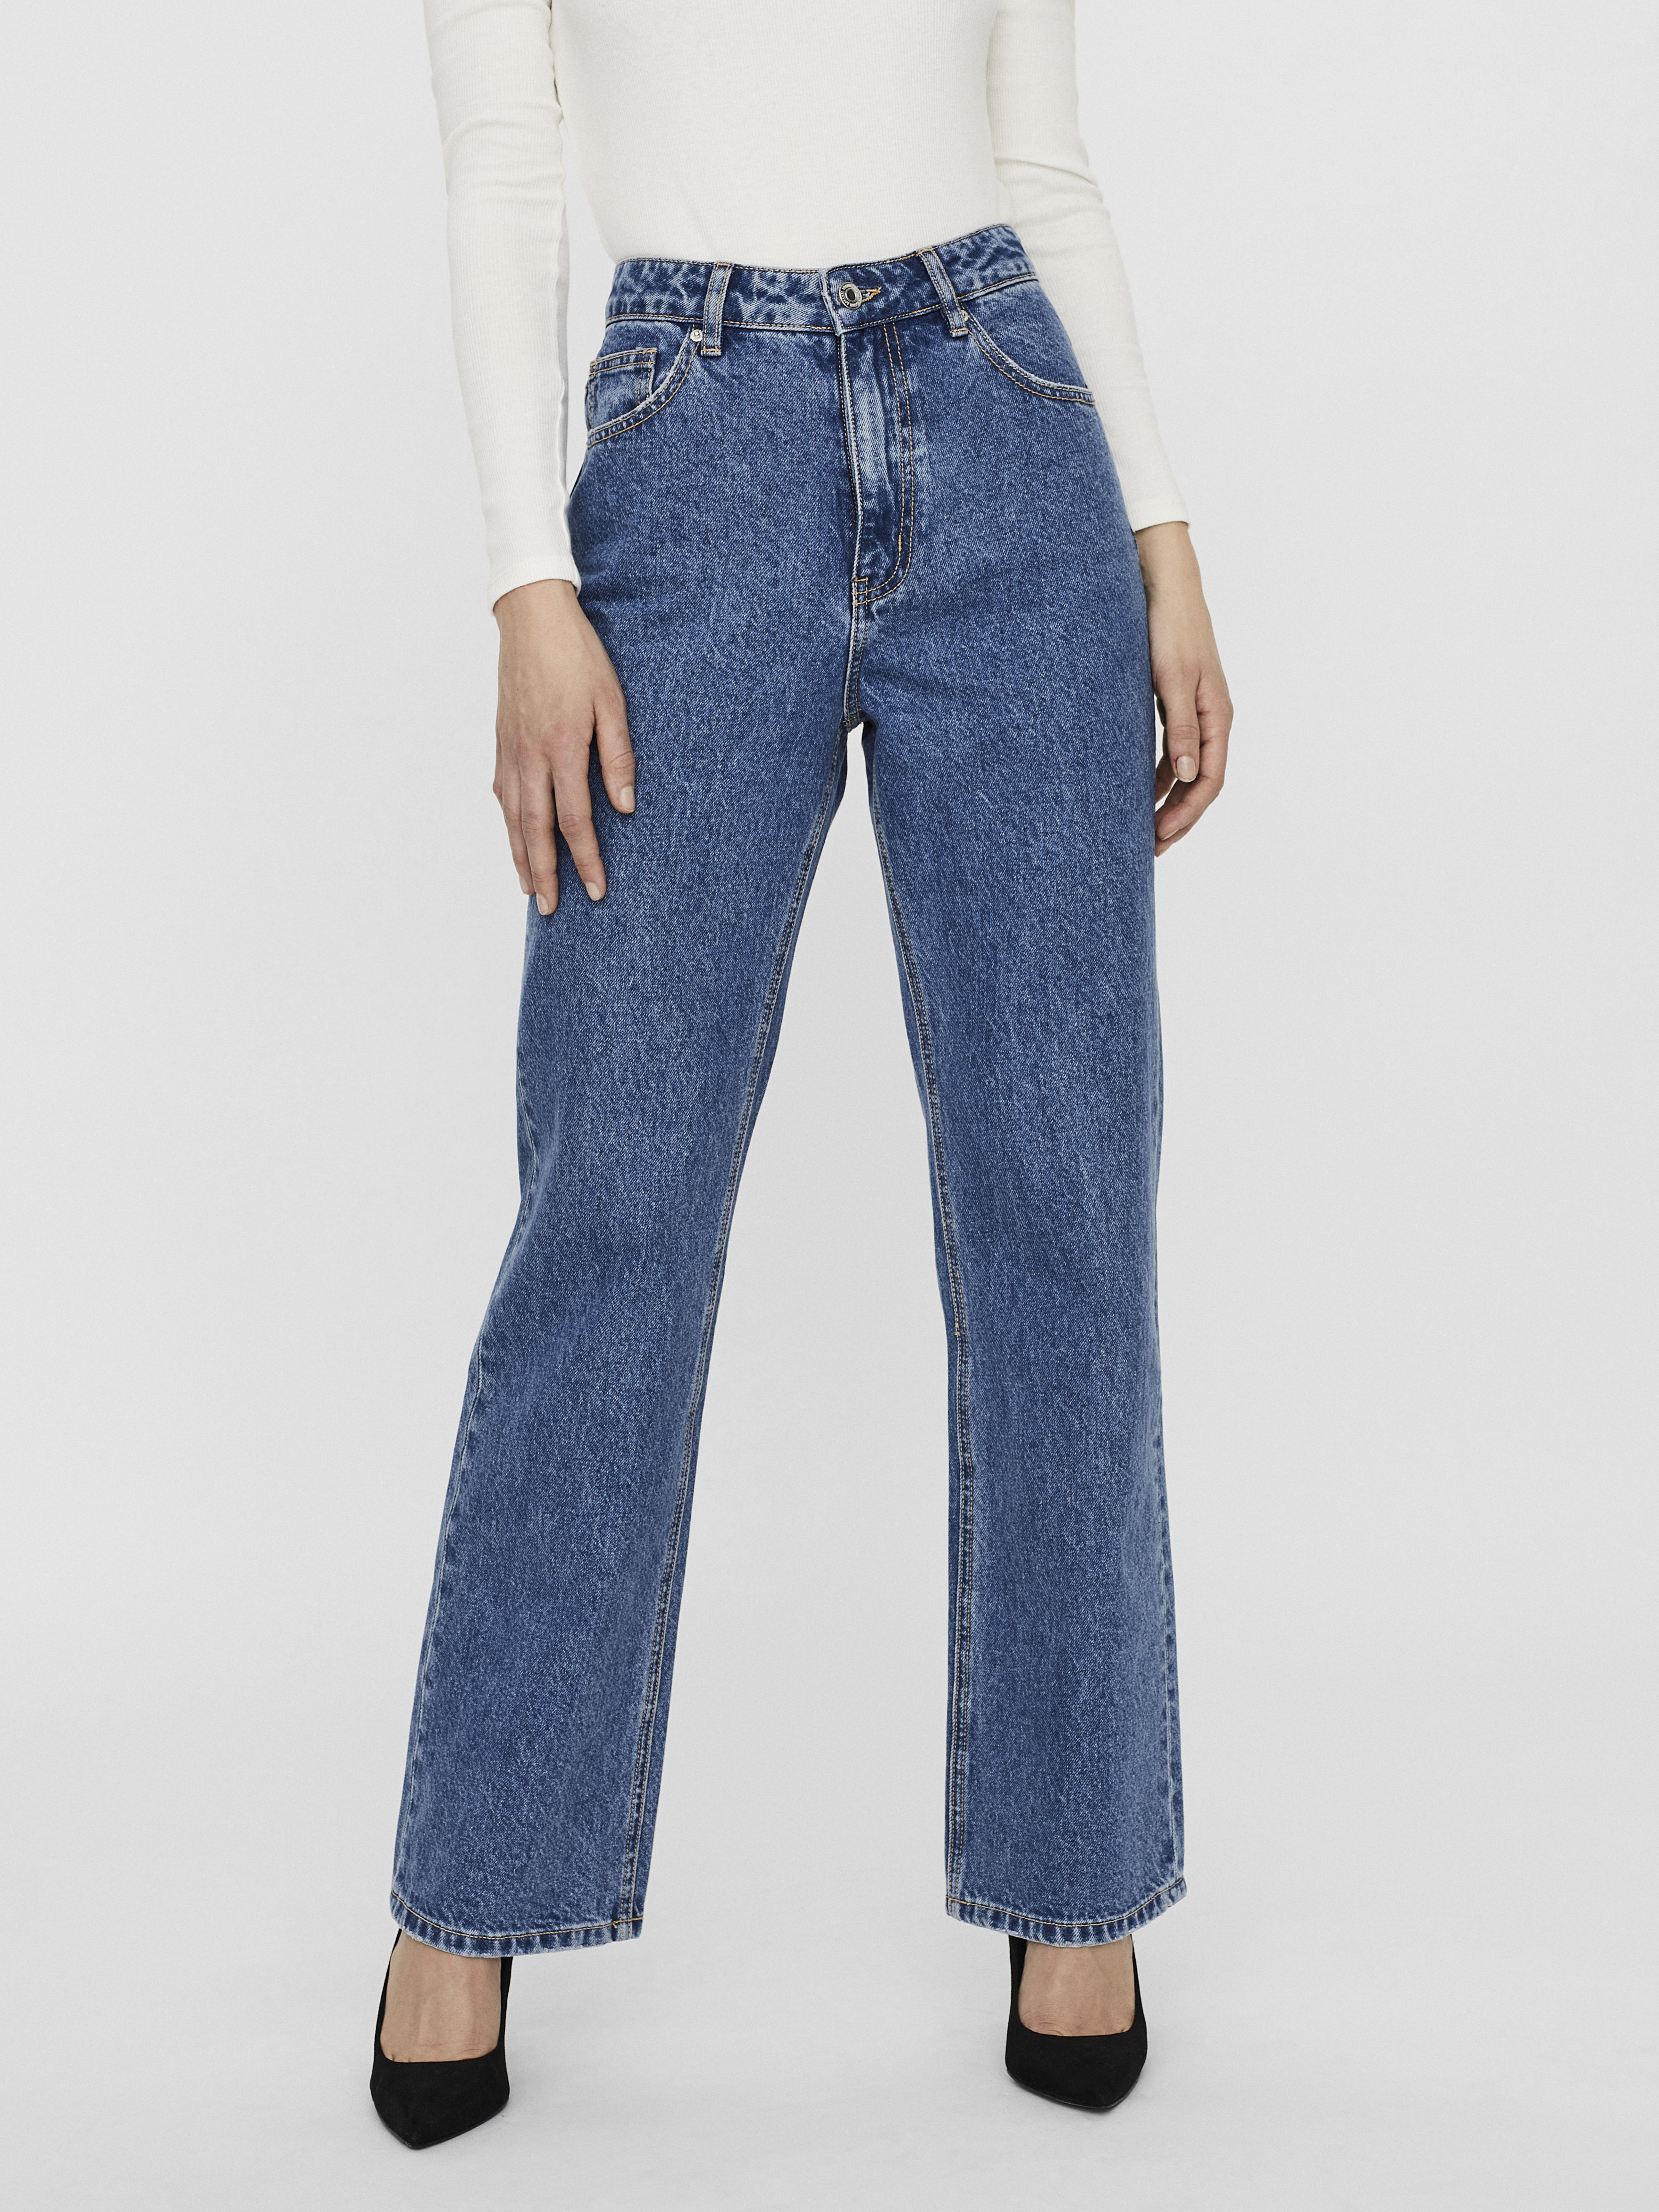 Kithy Jeans, Medium Blue Denim, W29/L32